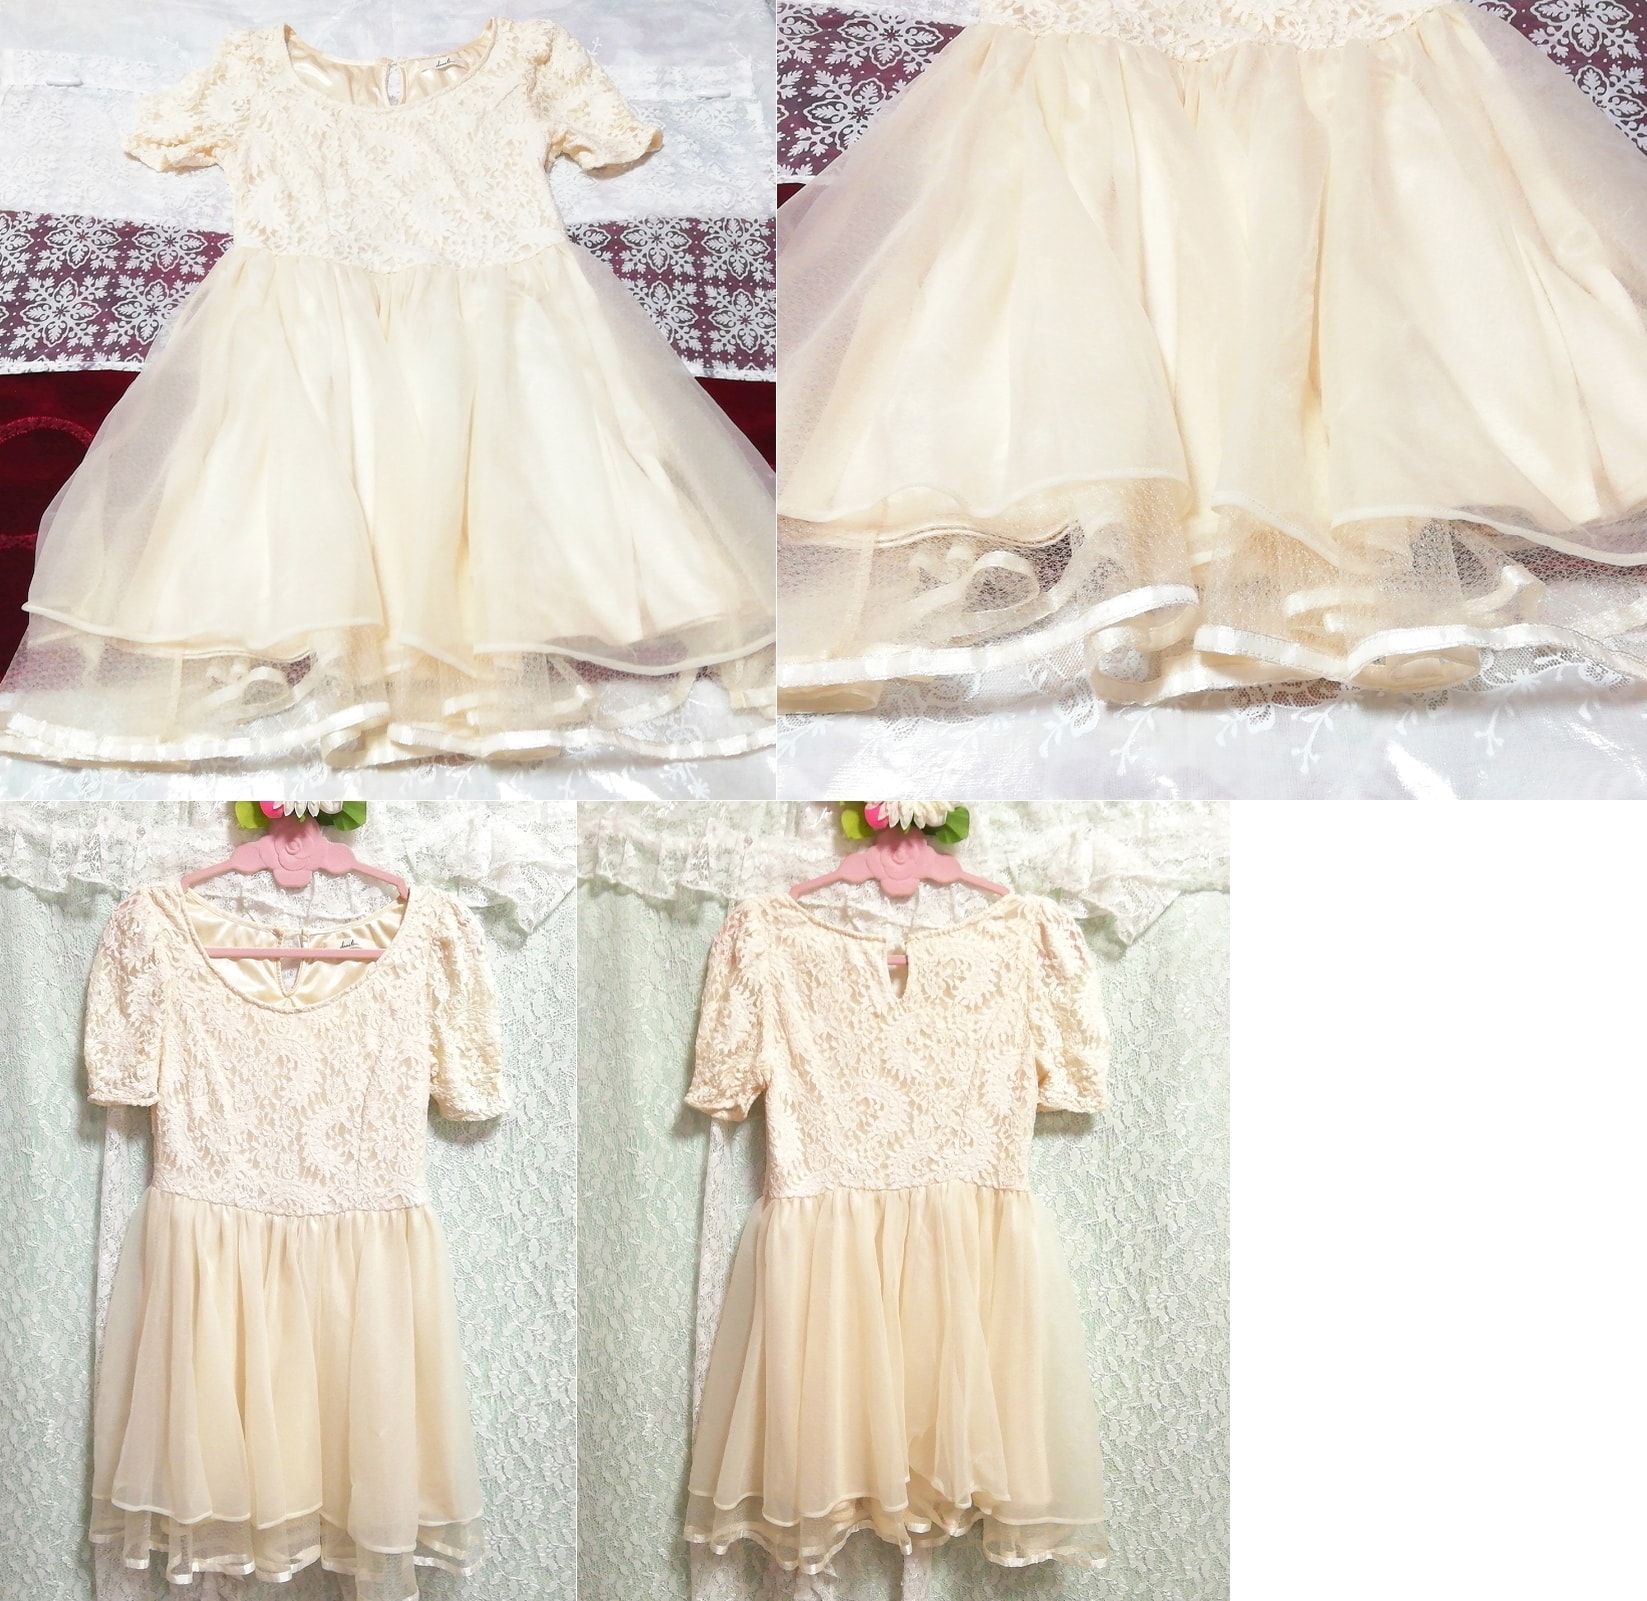 Floral white lace tulle skirt negligee nightgown short sleeve dress, fashion, ladies' fashion, nightwear, pajamas